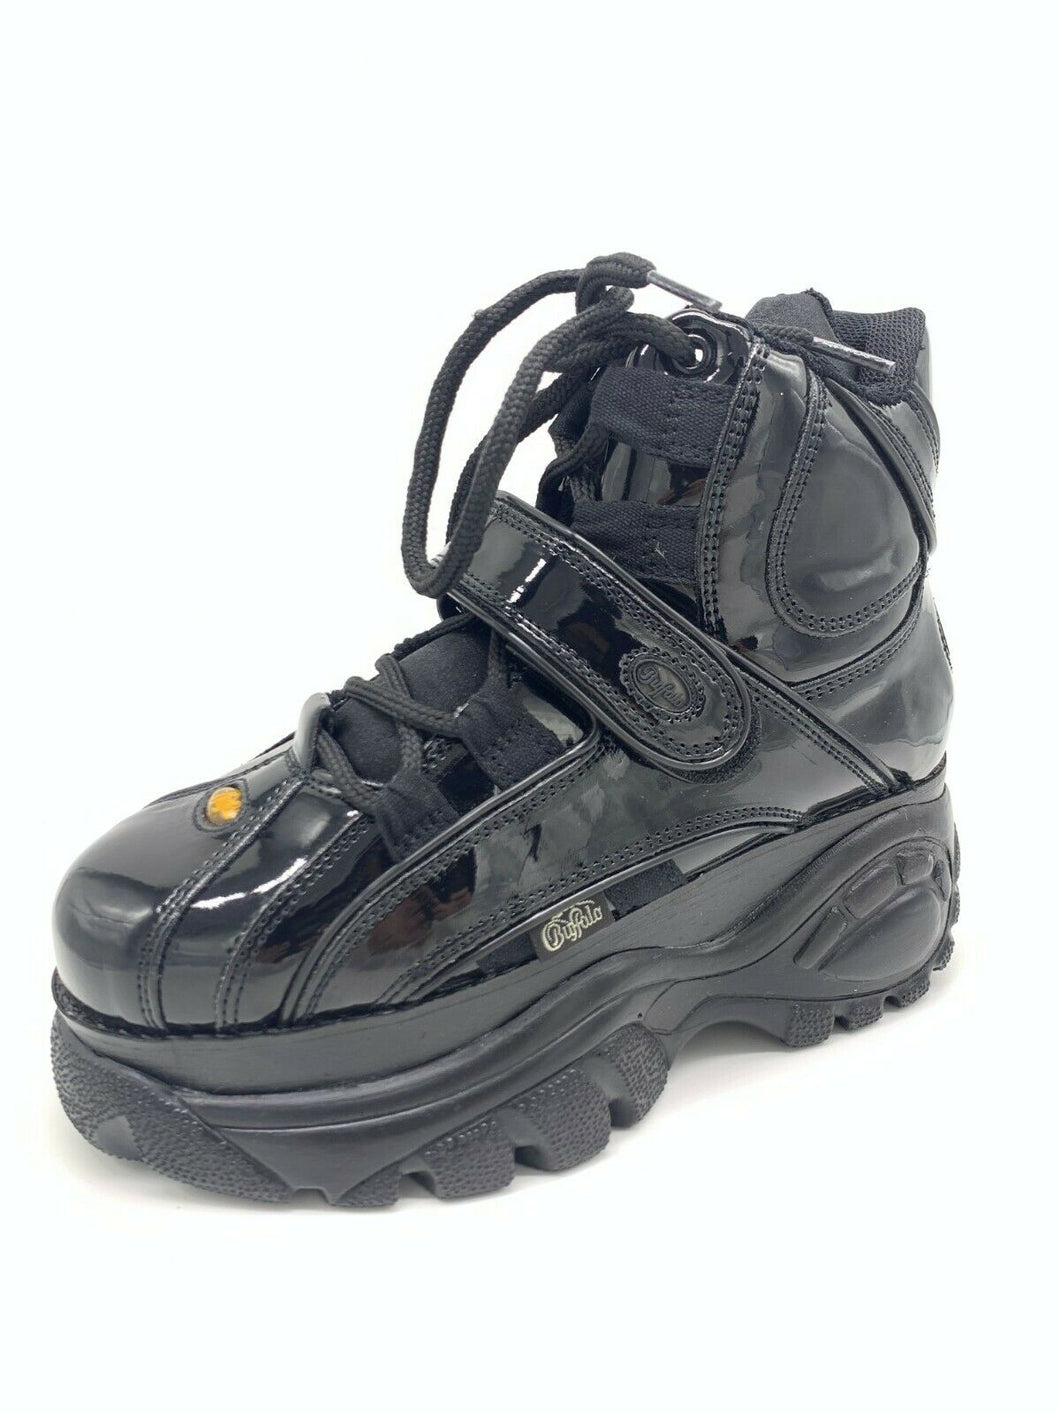 Buffalo Classic Boots Shoes Plateau Schuhe 90er Schwarz Lackleder 1348-14 NEU